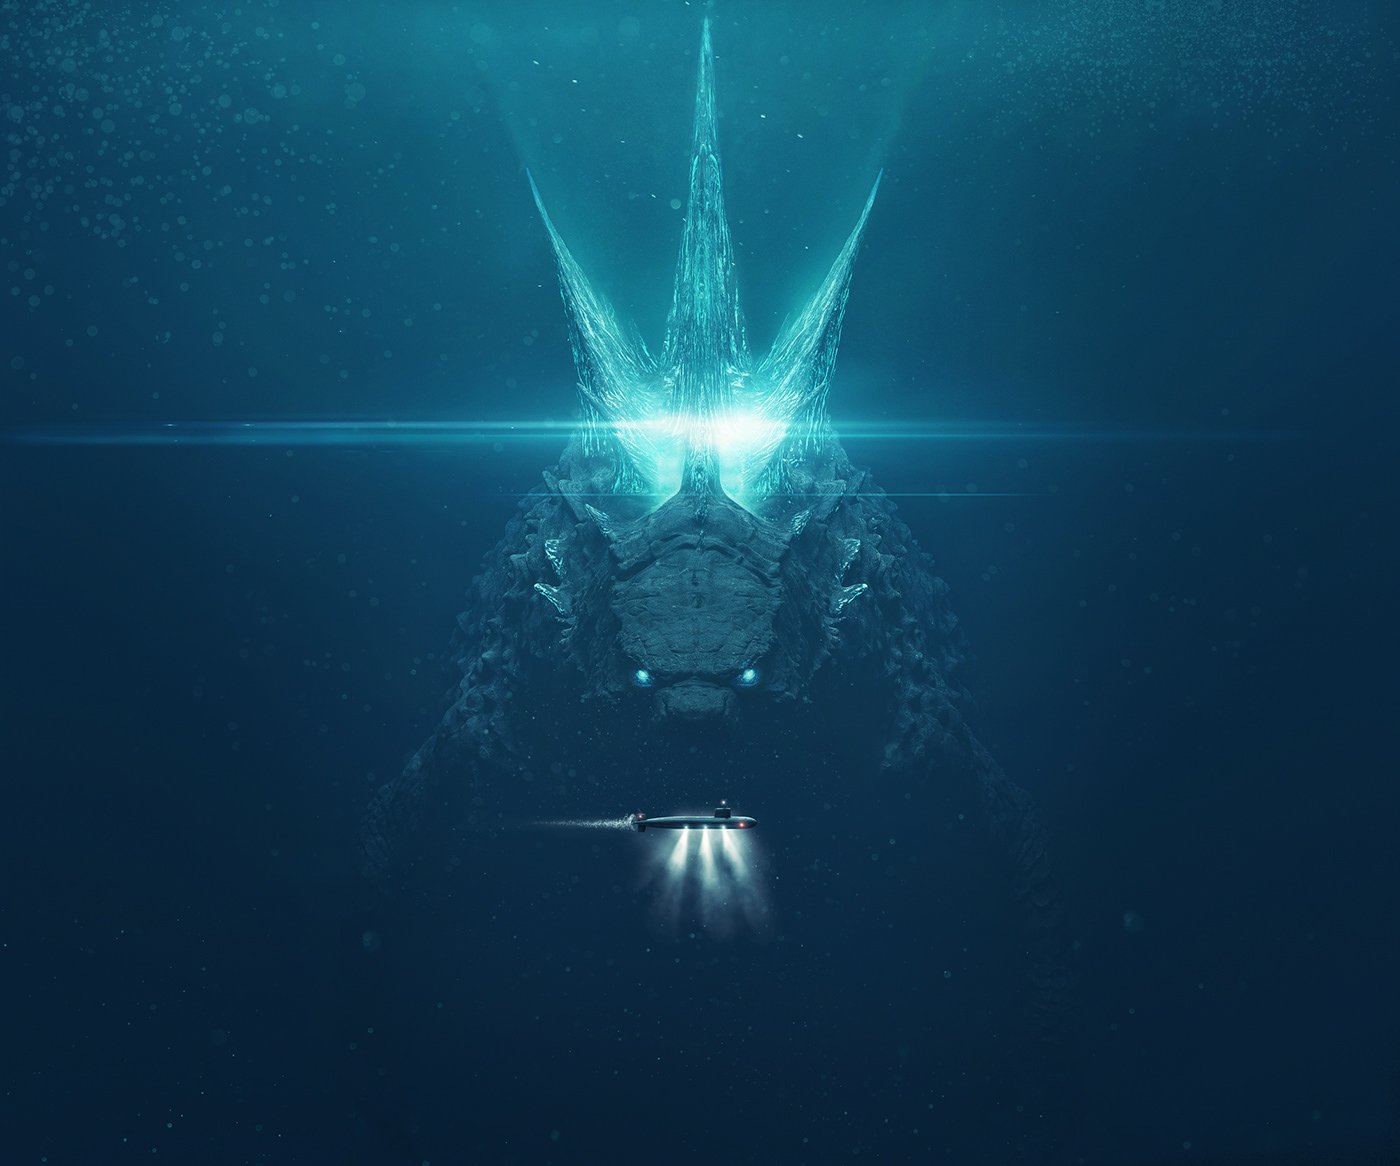 Godzilla submerged movie still